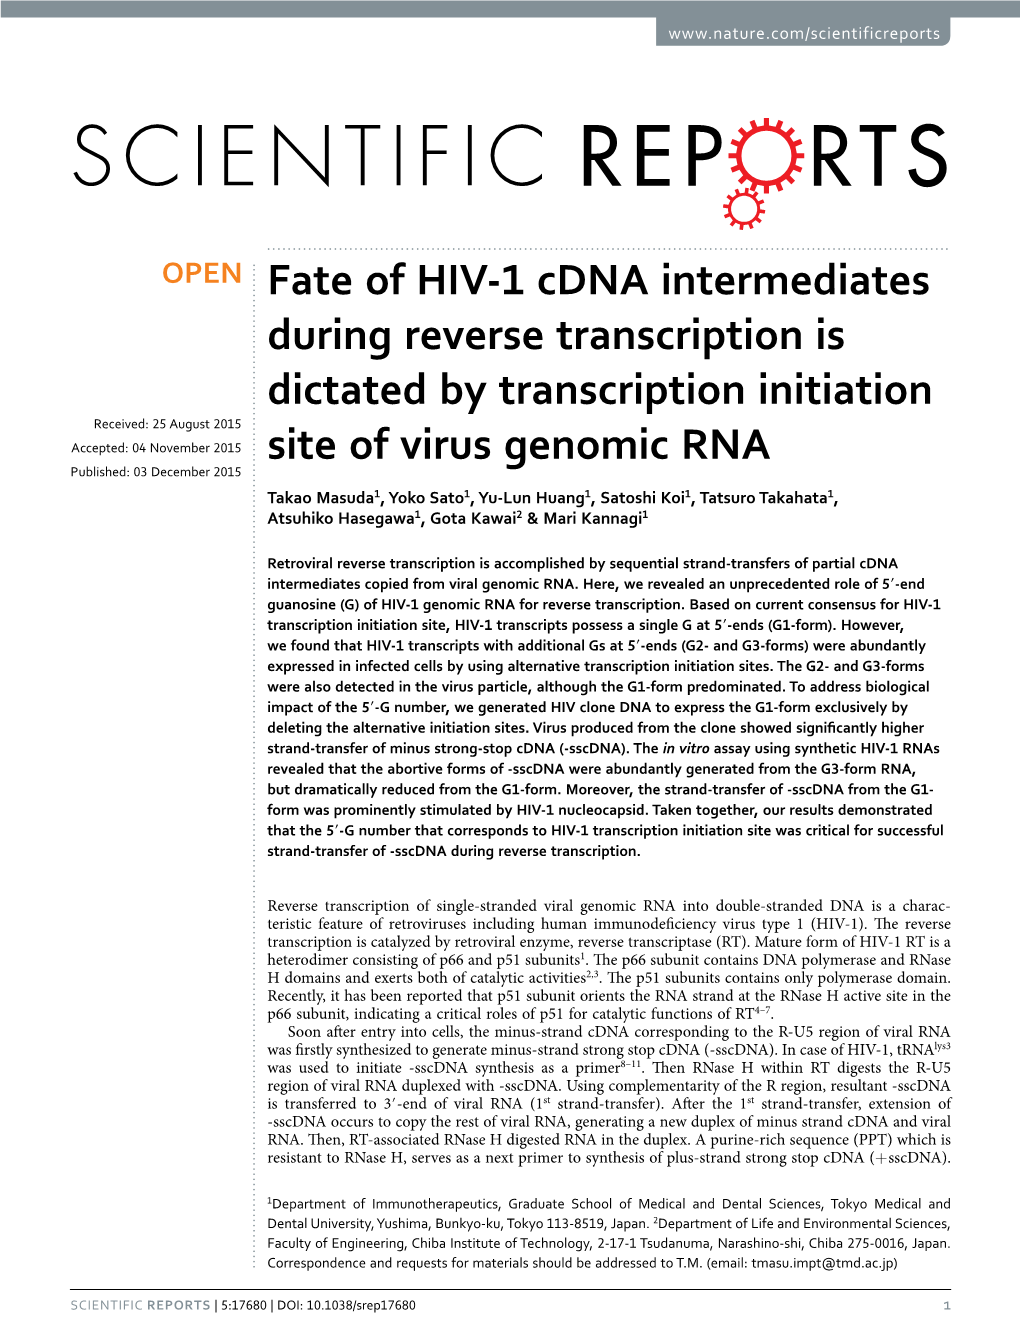 Fate of HIV-1 Cdna Intermediates During Reverse Transcription Is